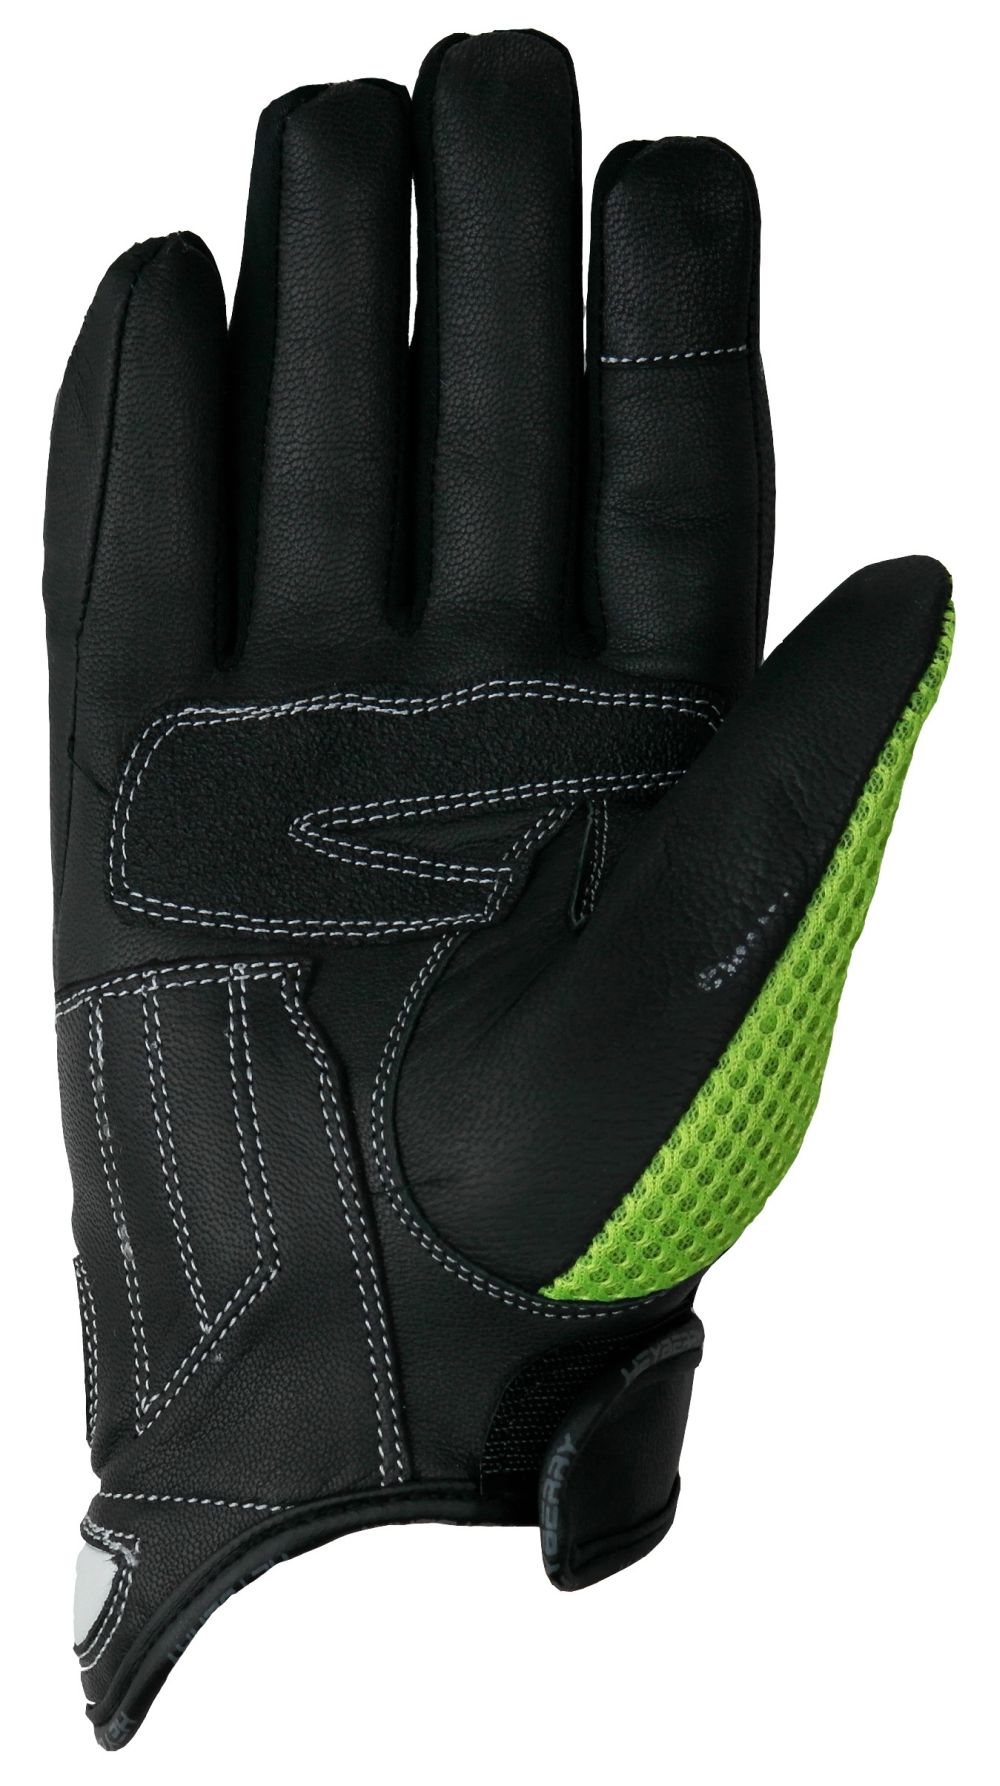 HEYBERRY Motorrad Handschuhe Motorradhandschuhe Sommer schwarz neon Gr L 